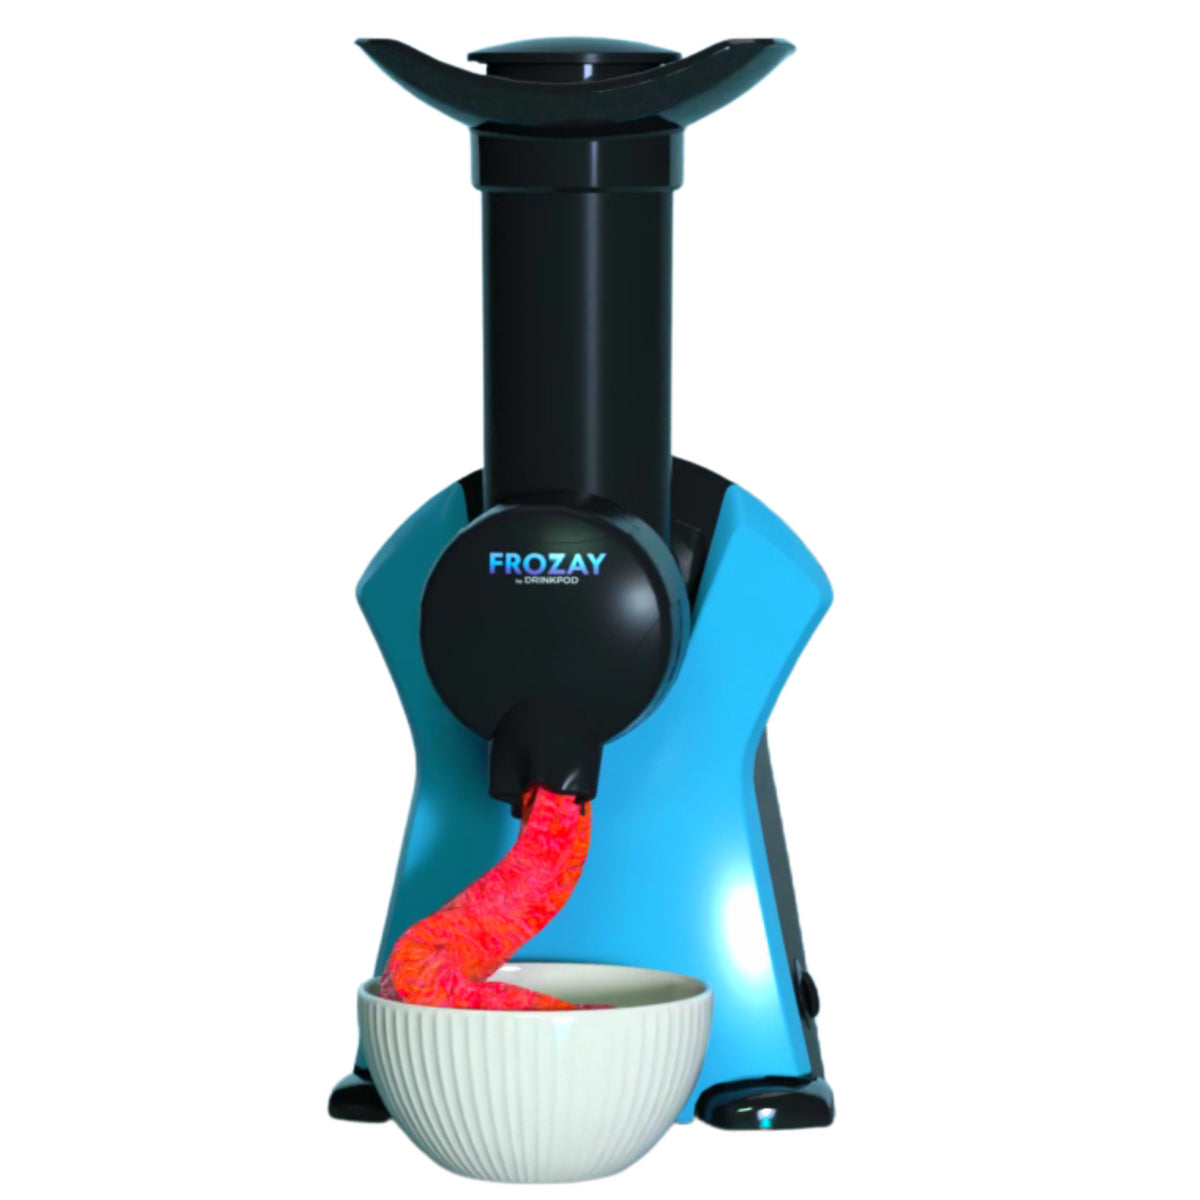 Frozay Dessert Maker 2.8 qt. Color Blue, Vegan Ice Cream &amp; Frozen Yogurt Maker Soft Serve Desserts With Recipes (Black/Blue)